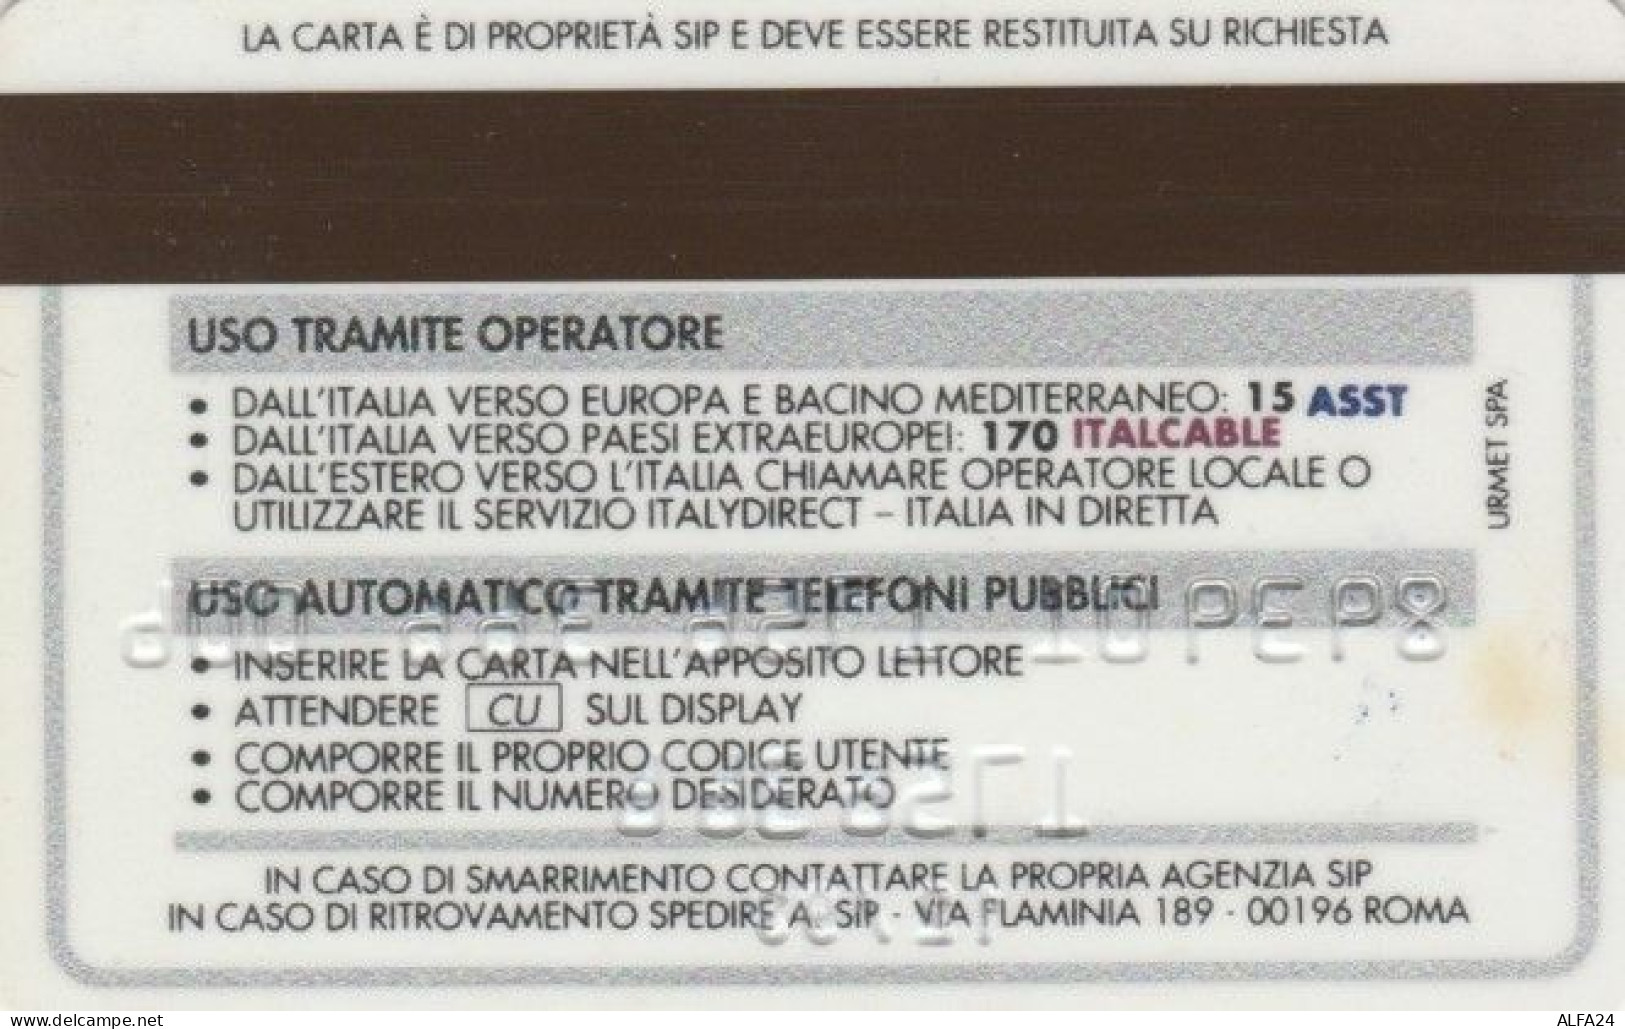 CARTA DI CREDITO TELEFONICA 12/93 (PY1648 - Speciaal Gebruik